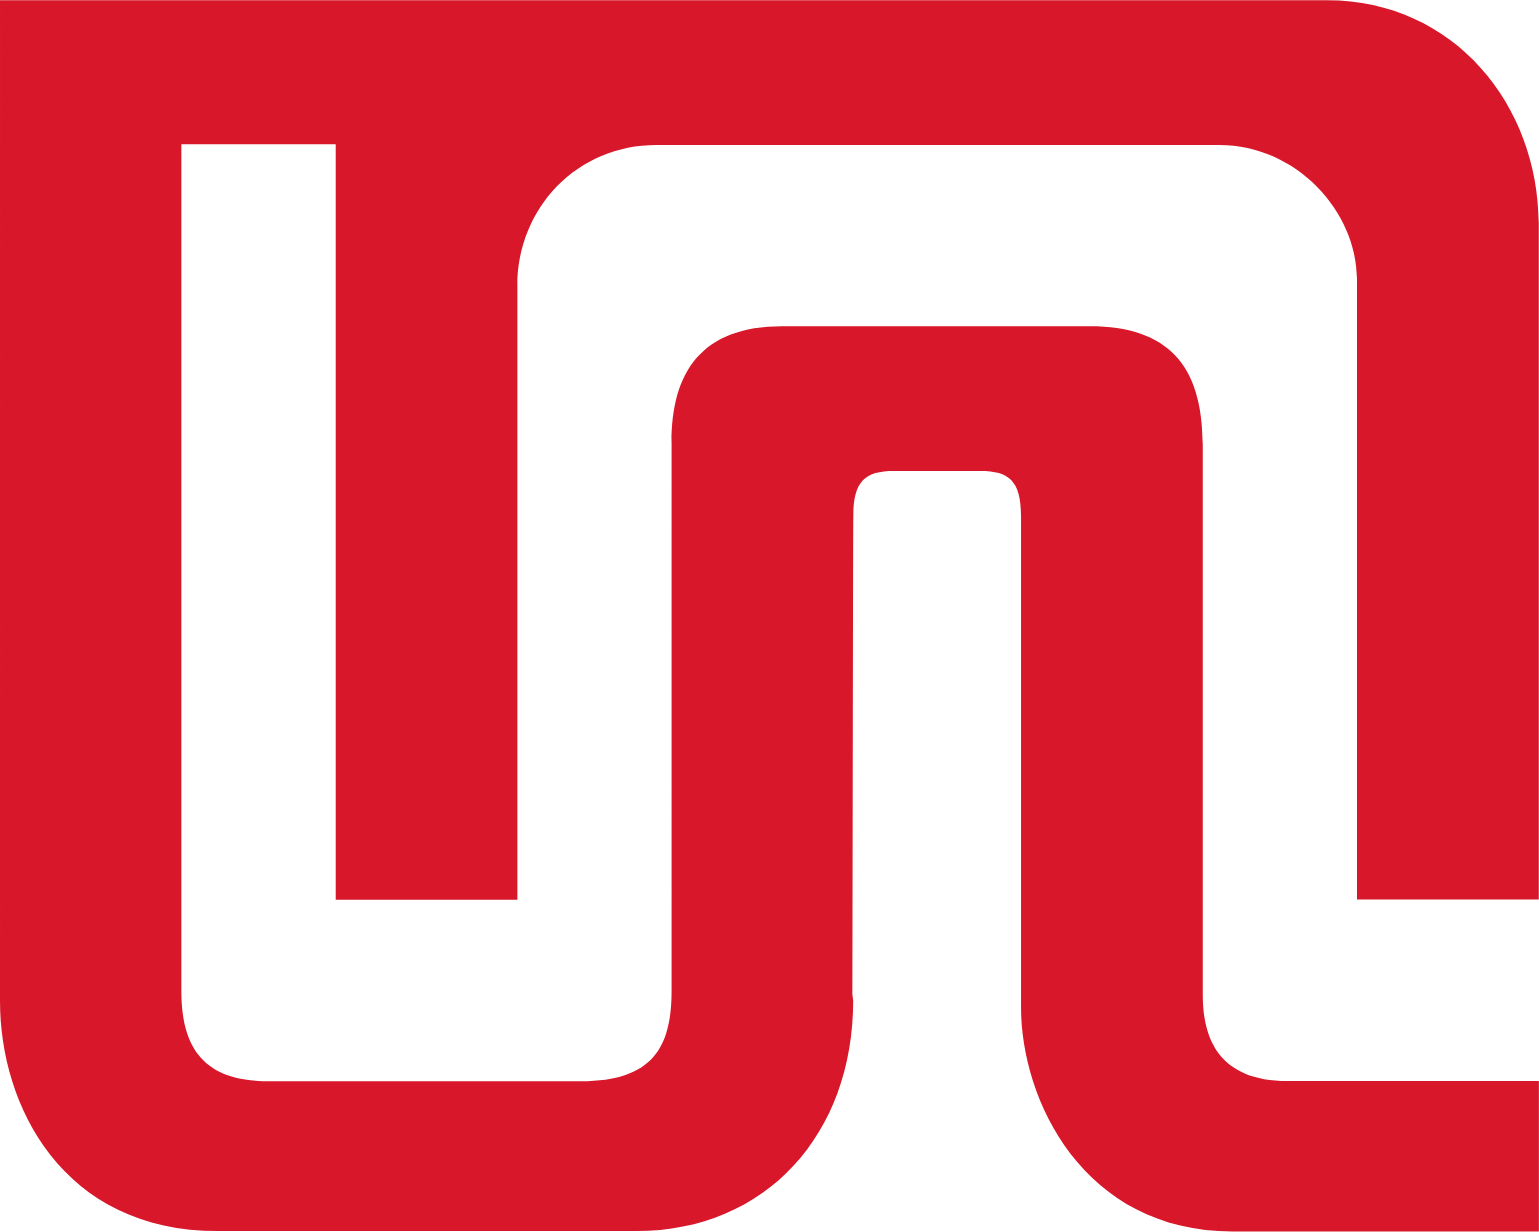 New World Development Company logo (PNG transparent)